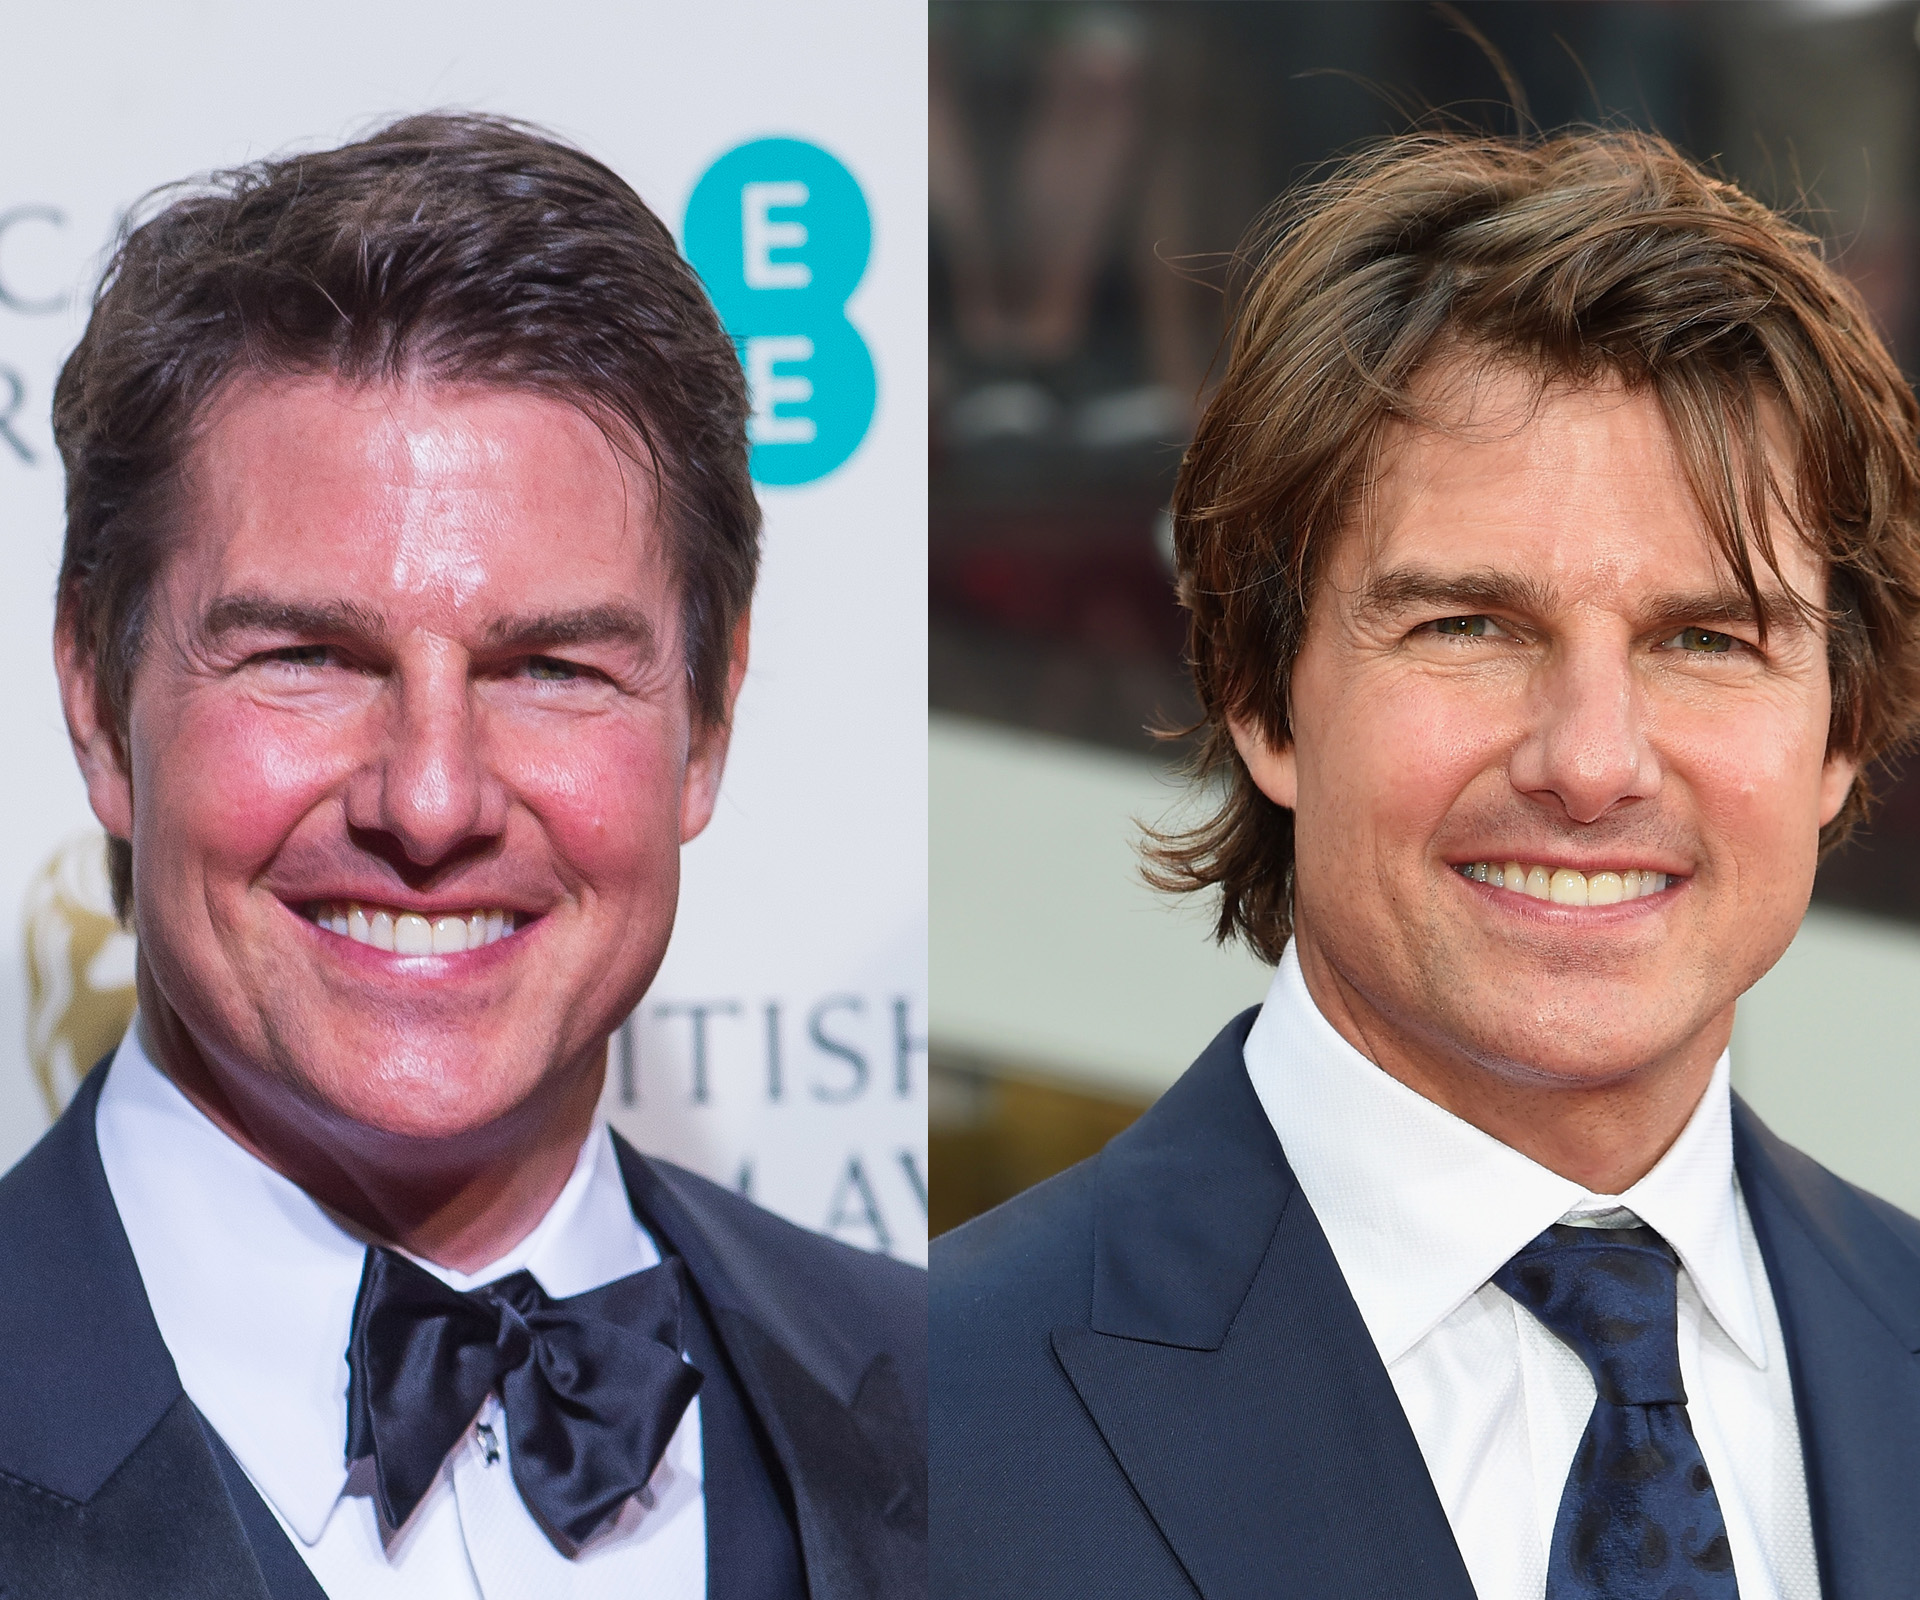 Internet goes berserk over Tom Cruise’s “puffy” face